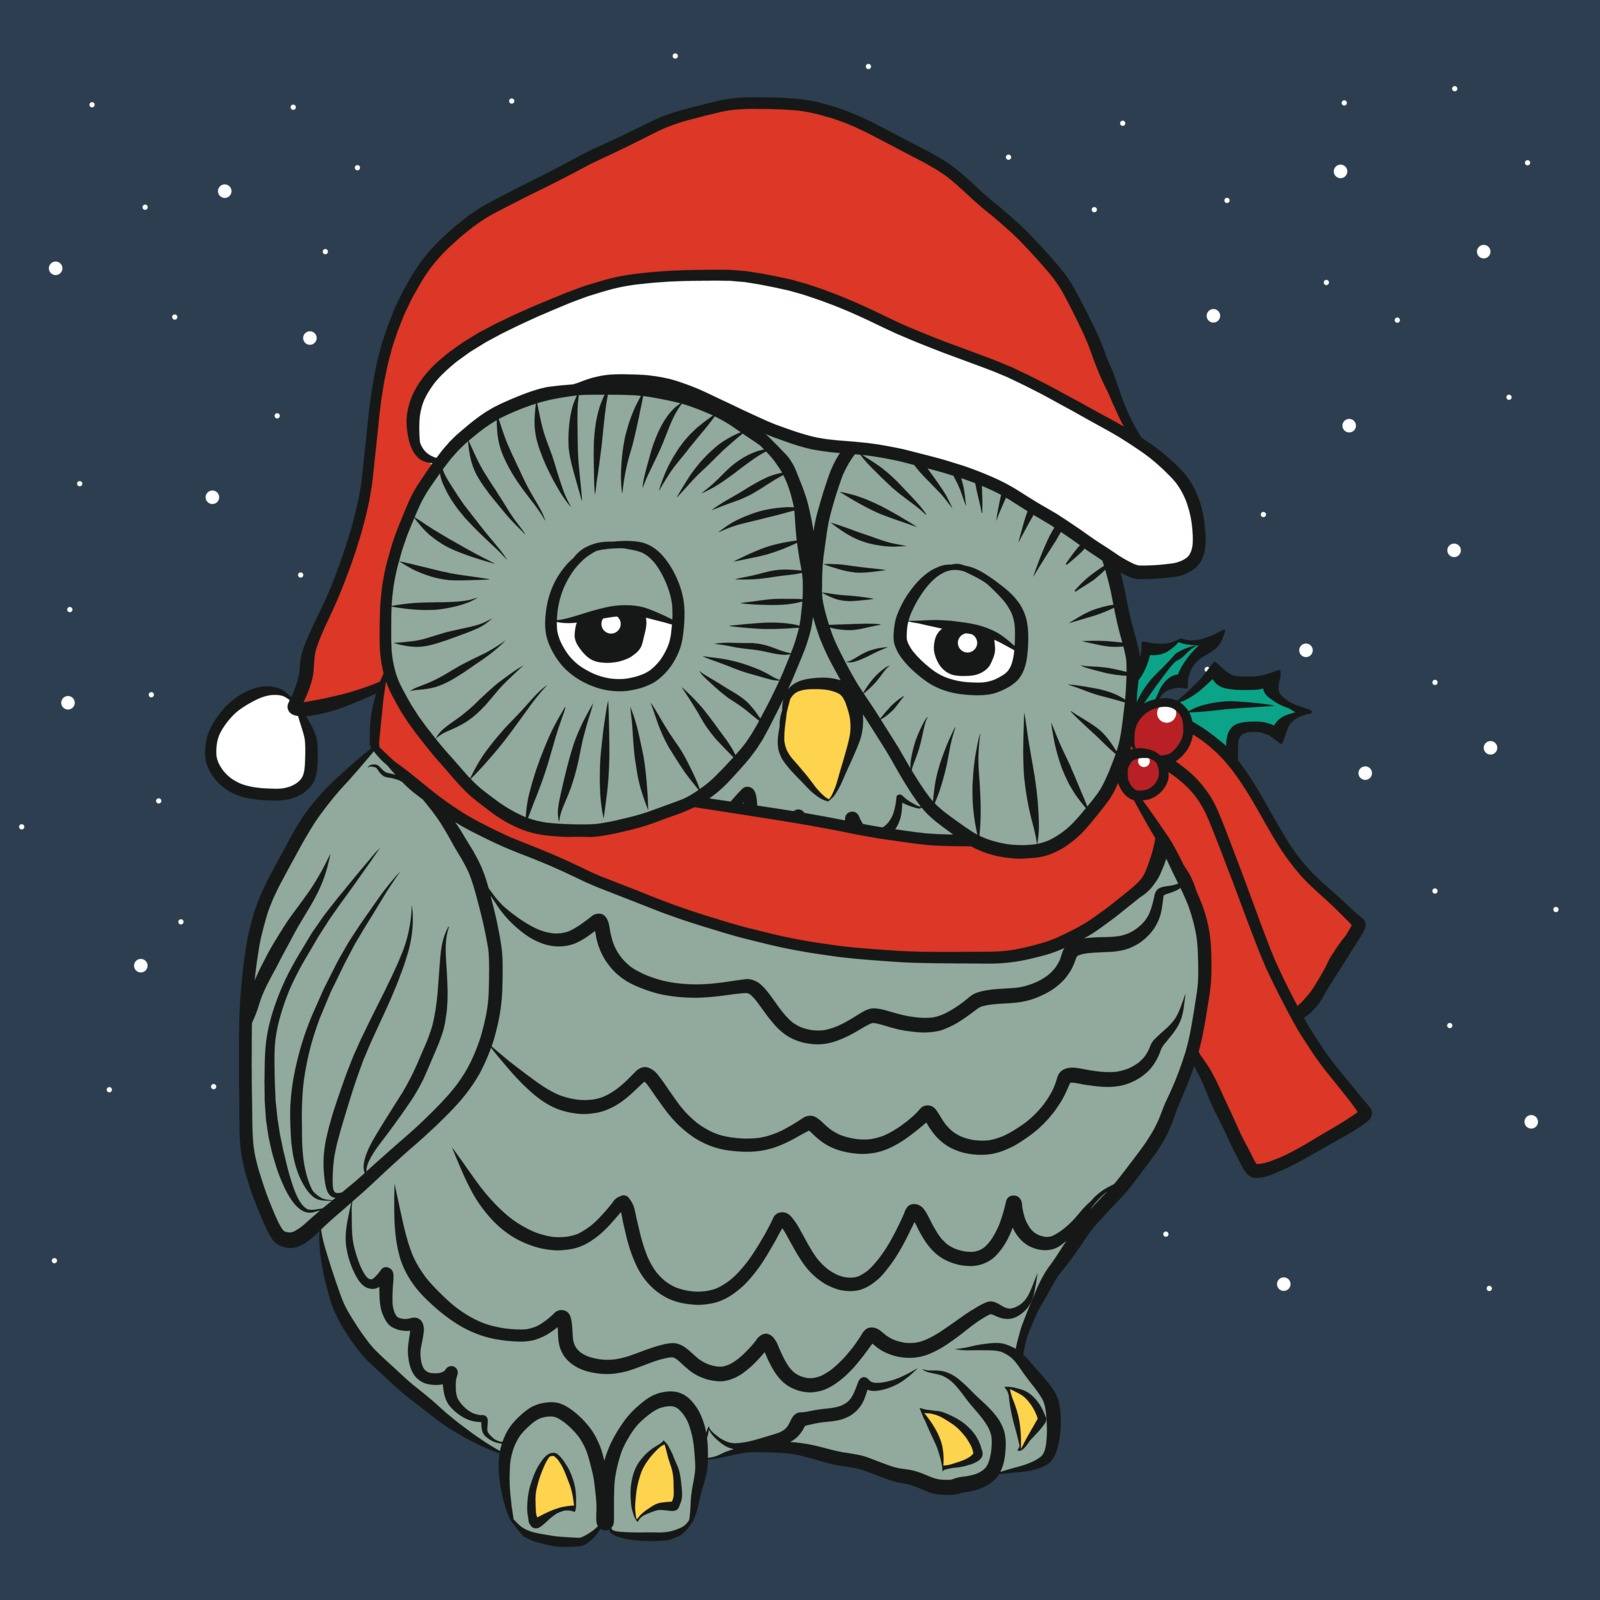 Owl wear santa hat in Christmas time cartoon vector illustration